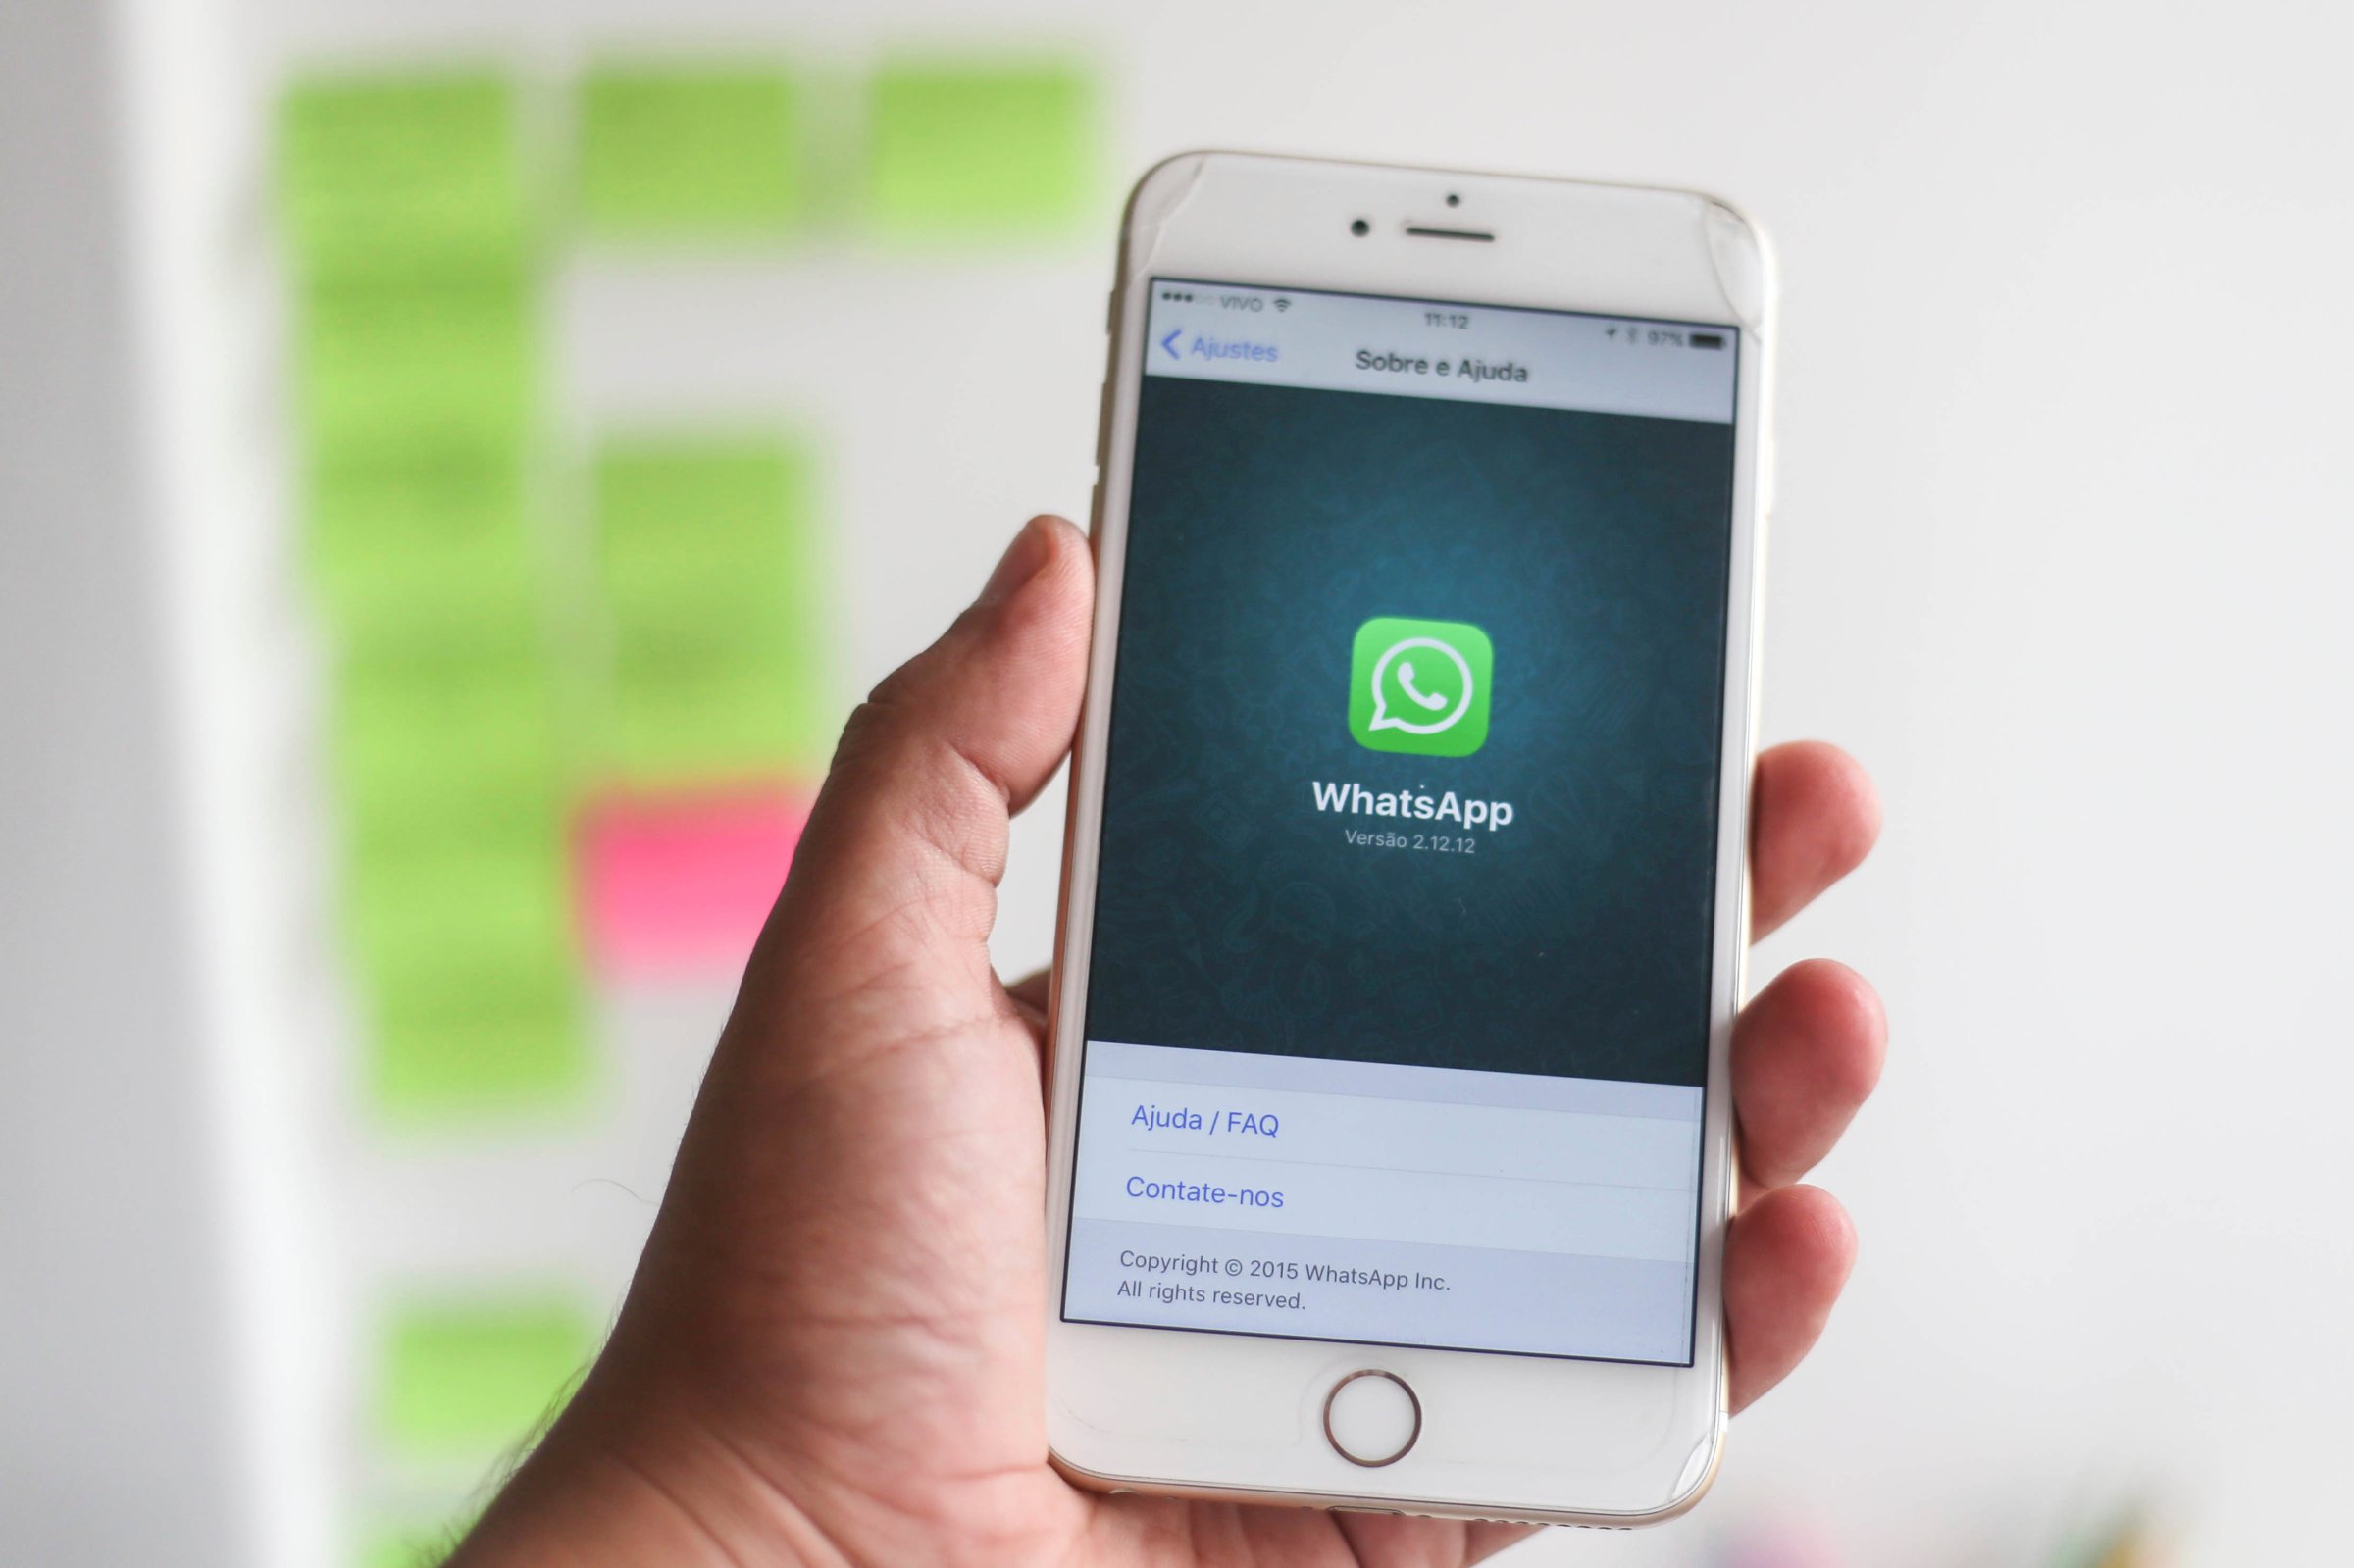 Jan Koum Announced WhatsApp Will be Free